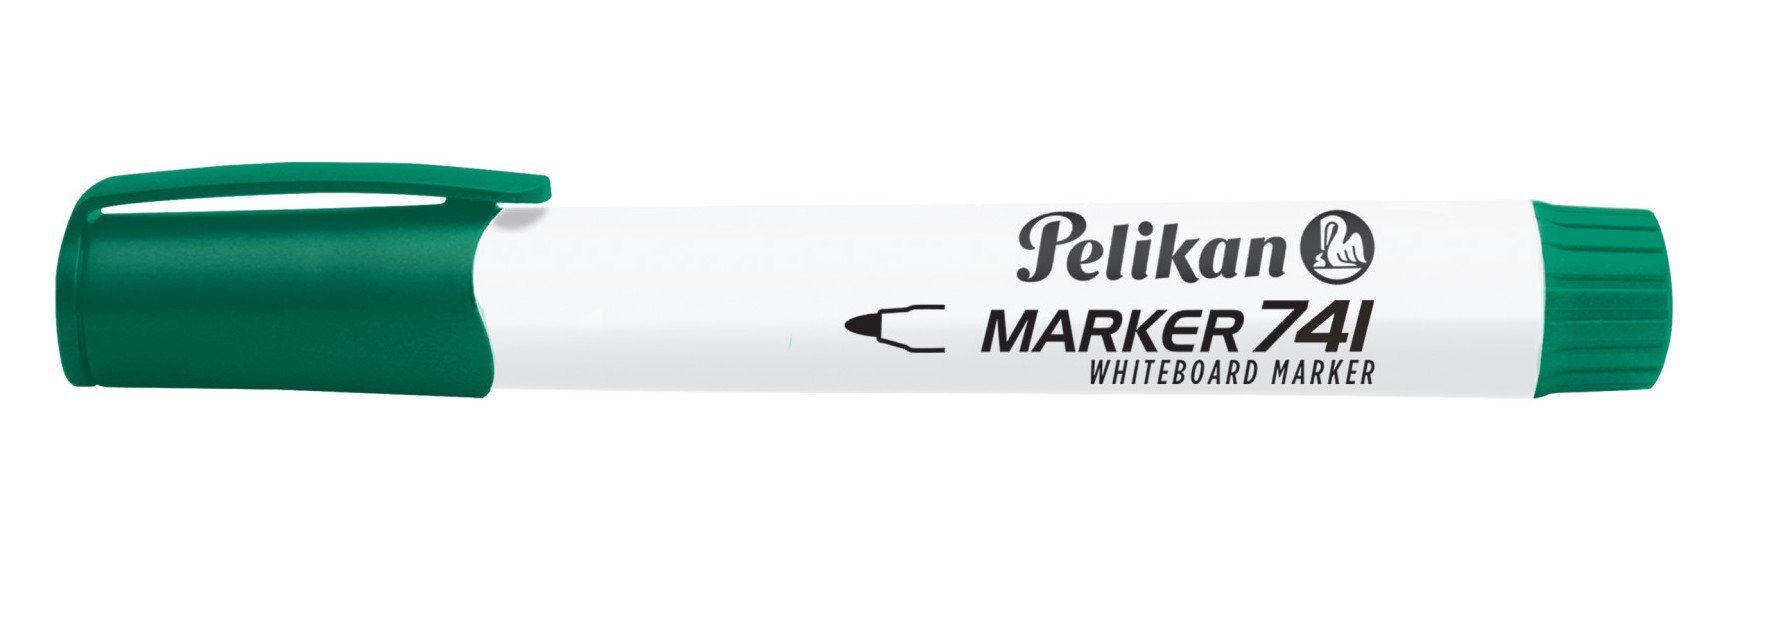 Whiteboard Pelikan grün Marker Marker 741 Pelikan